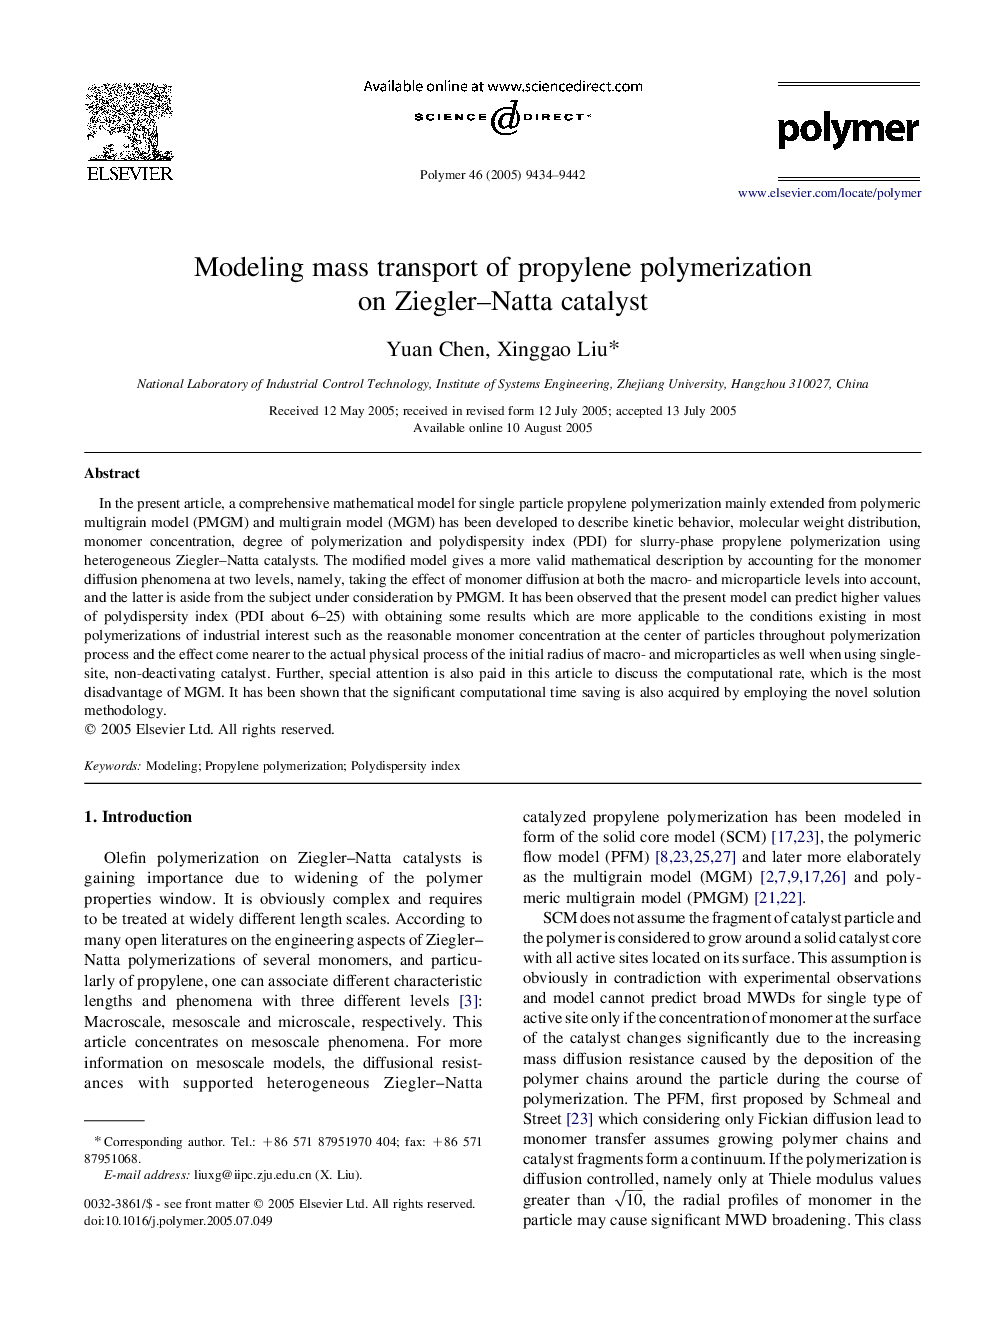 Modeling mass transport of propylene polymerization on Ziegler-Natta catalyst